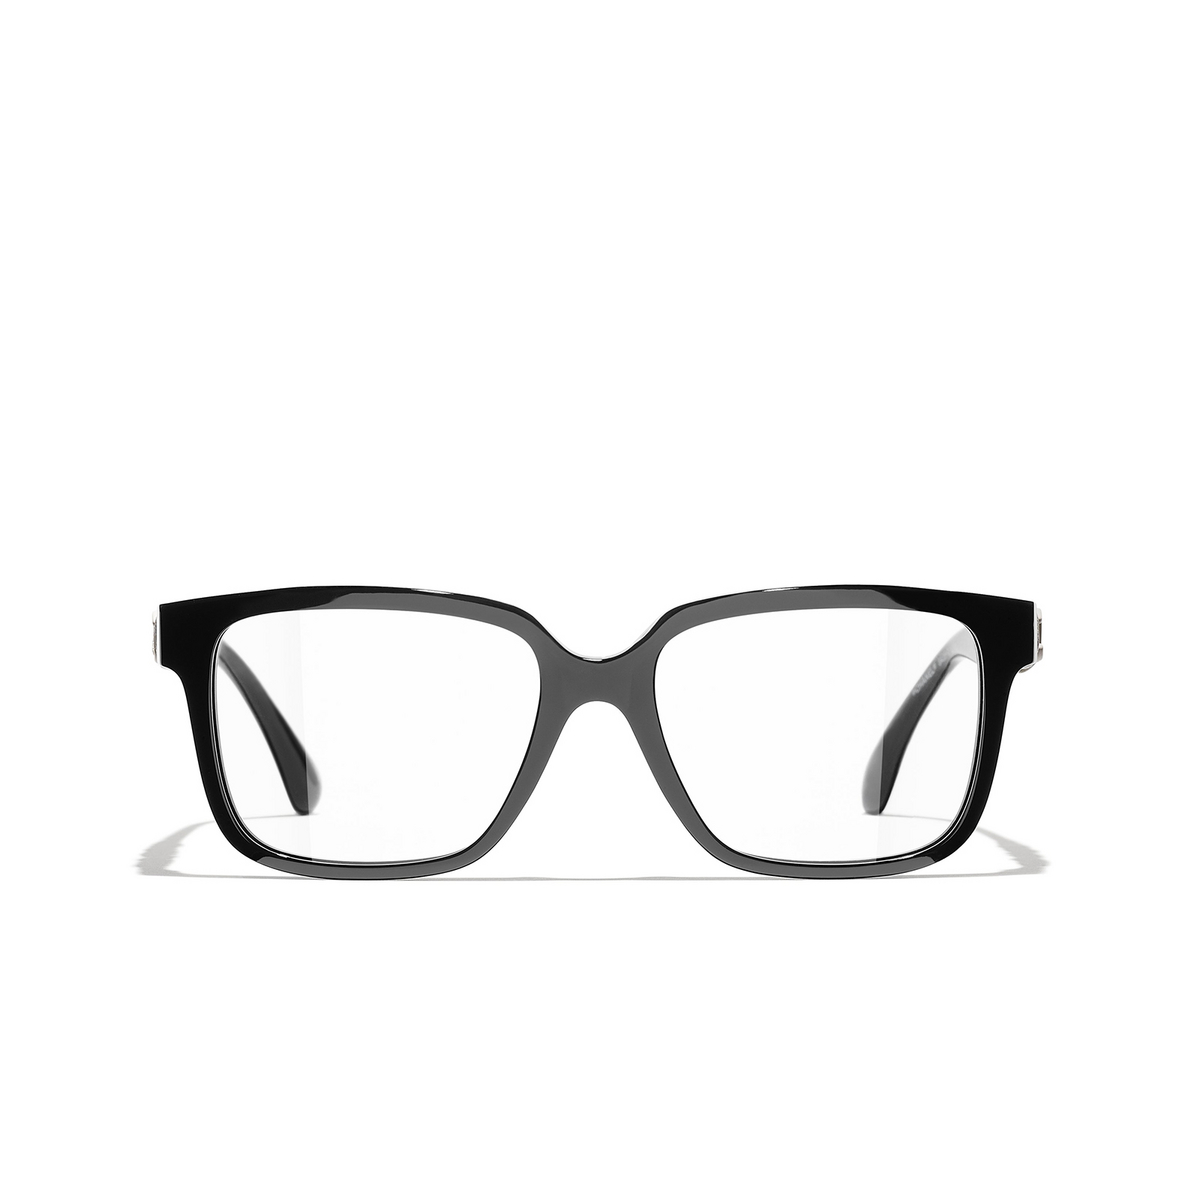 CHANEL square Eyeglasses 1082 Black & White - front view